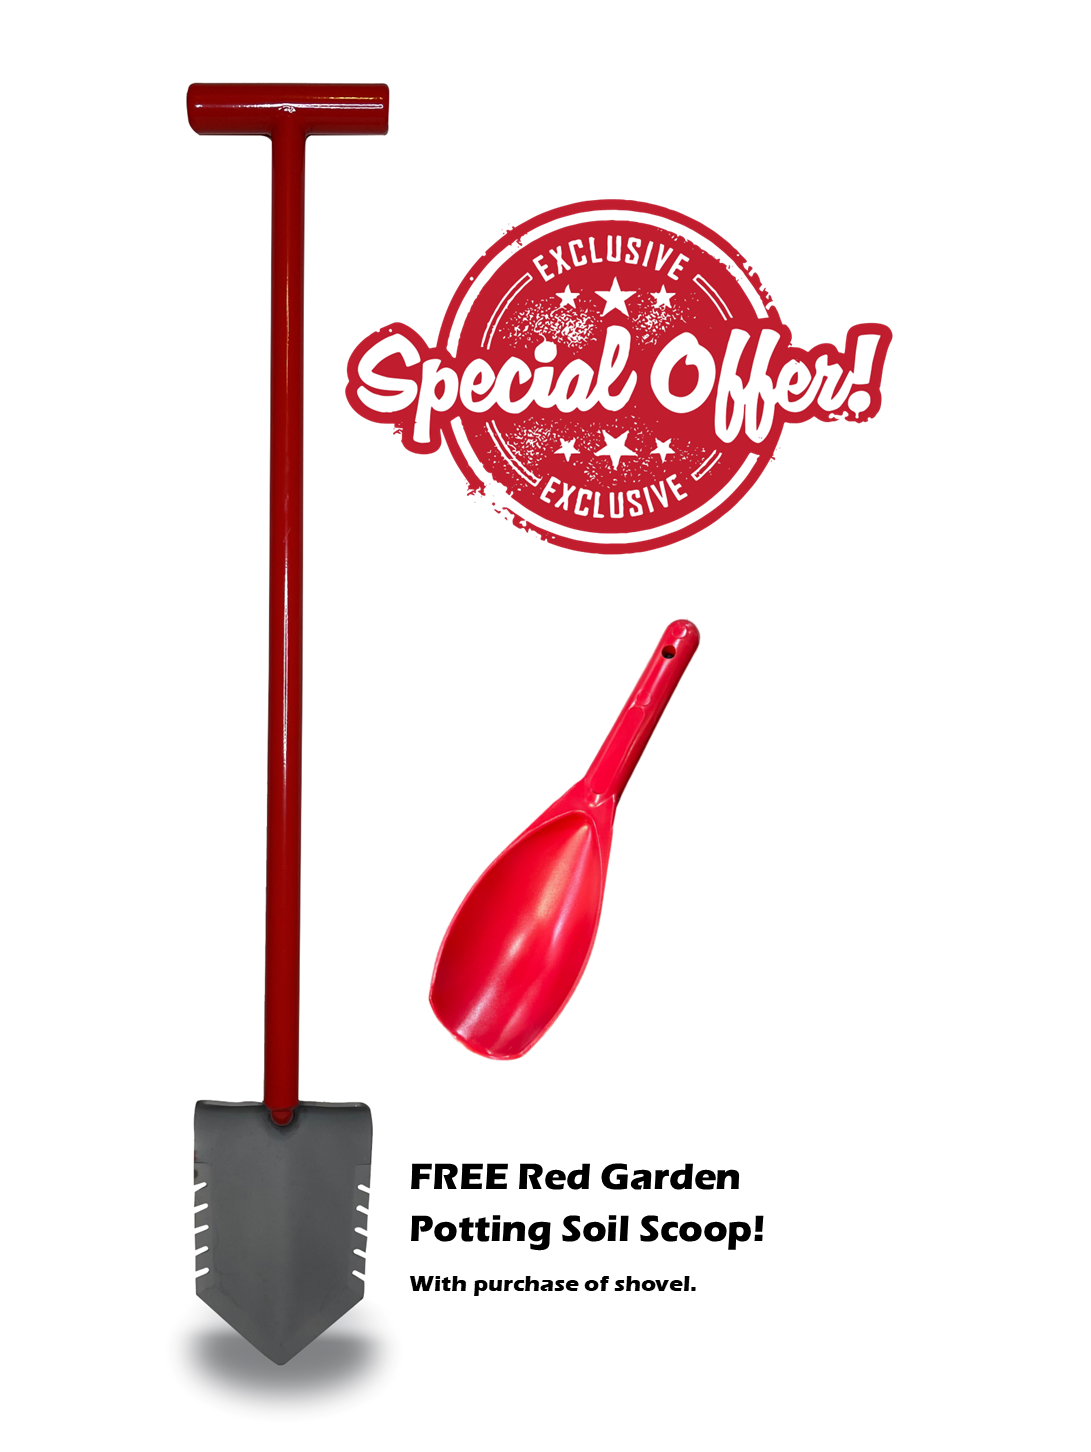 Special Offer Red Garden Shovel and Free Red Garden Potting Soil Scoop